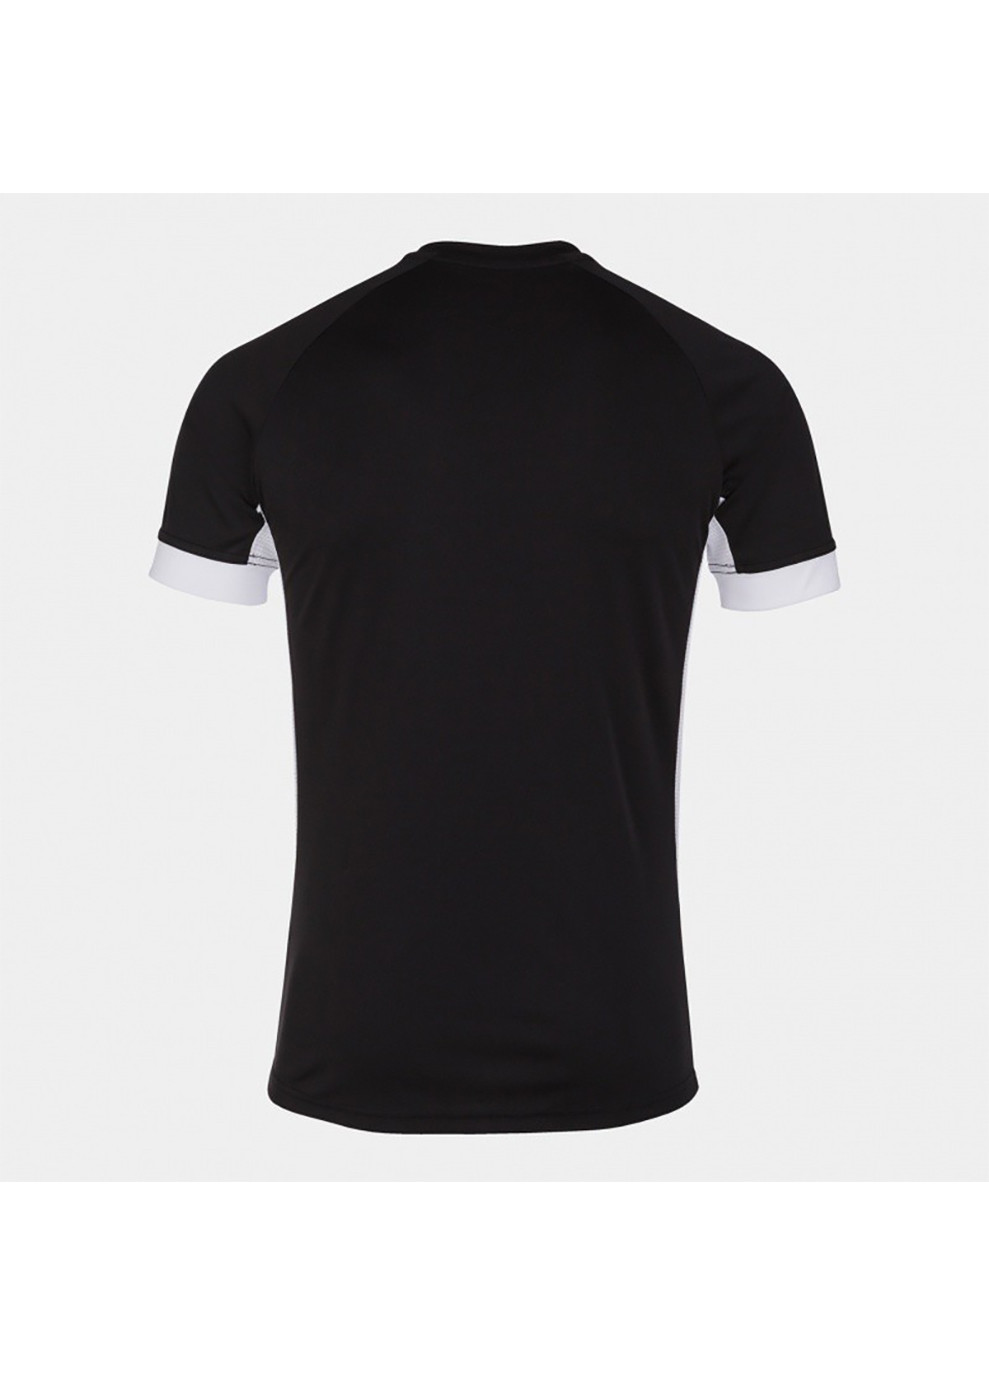 Чорна футболка supernova ii t-shirt back-white s/s чорний Joma